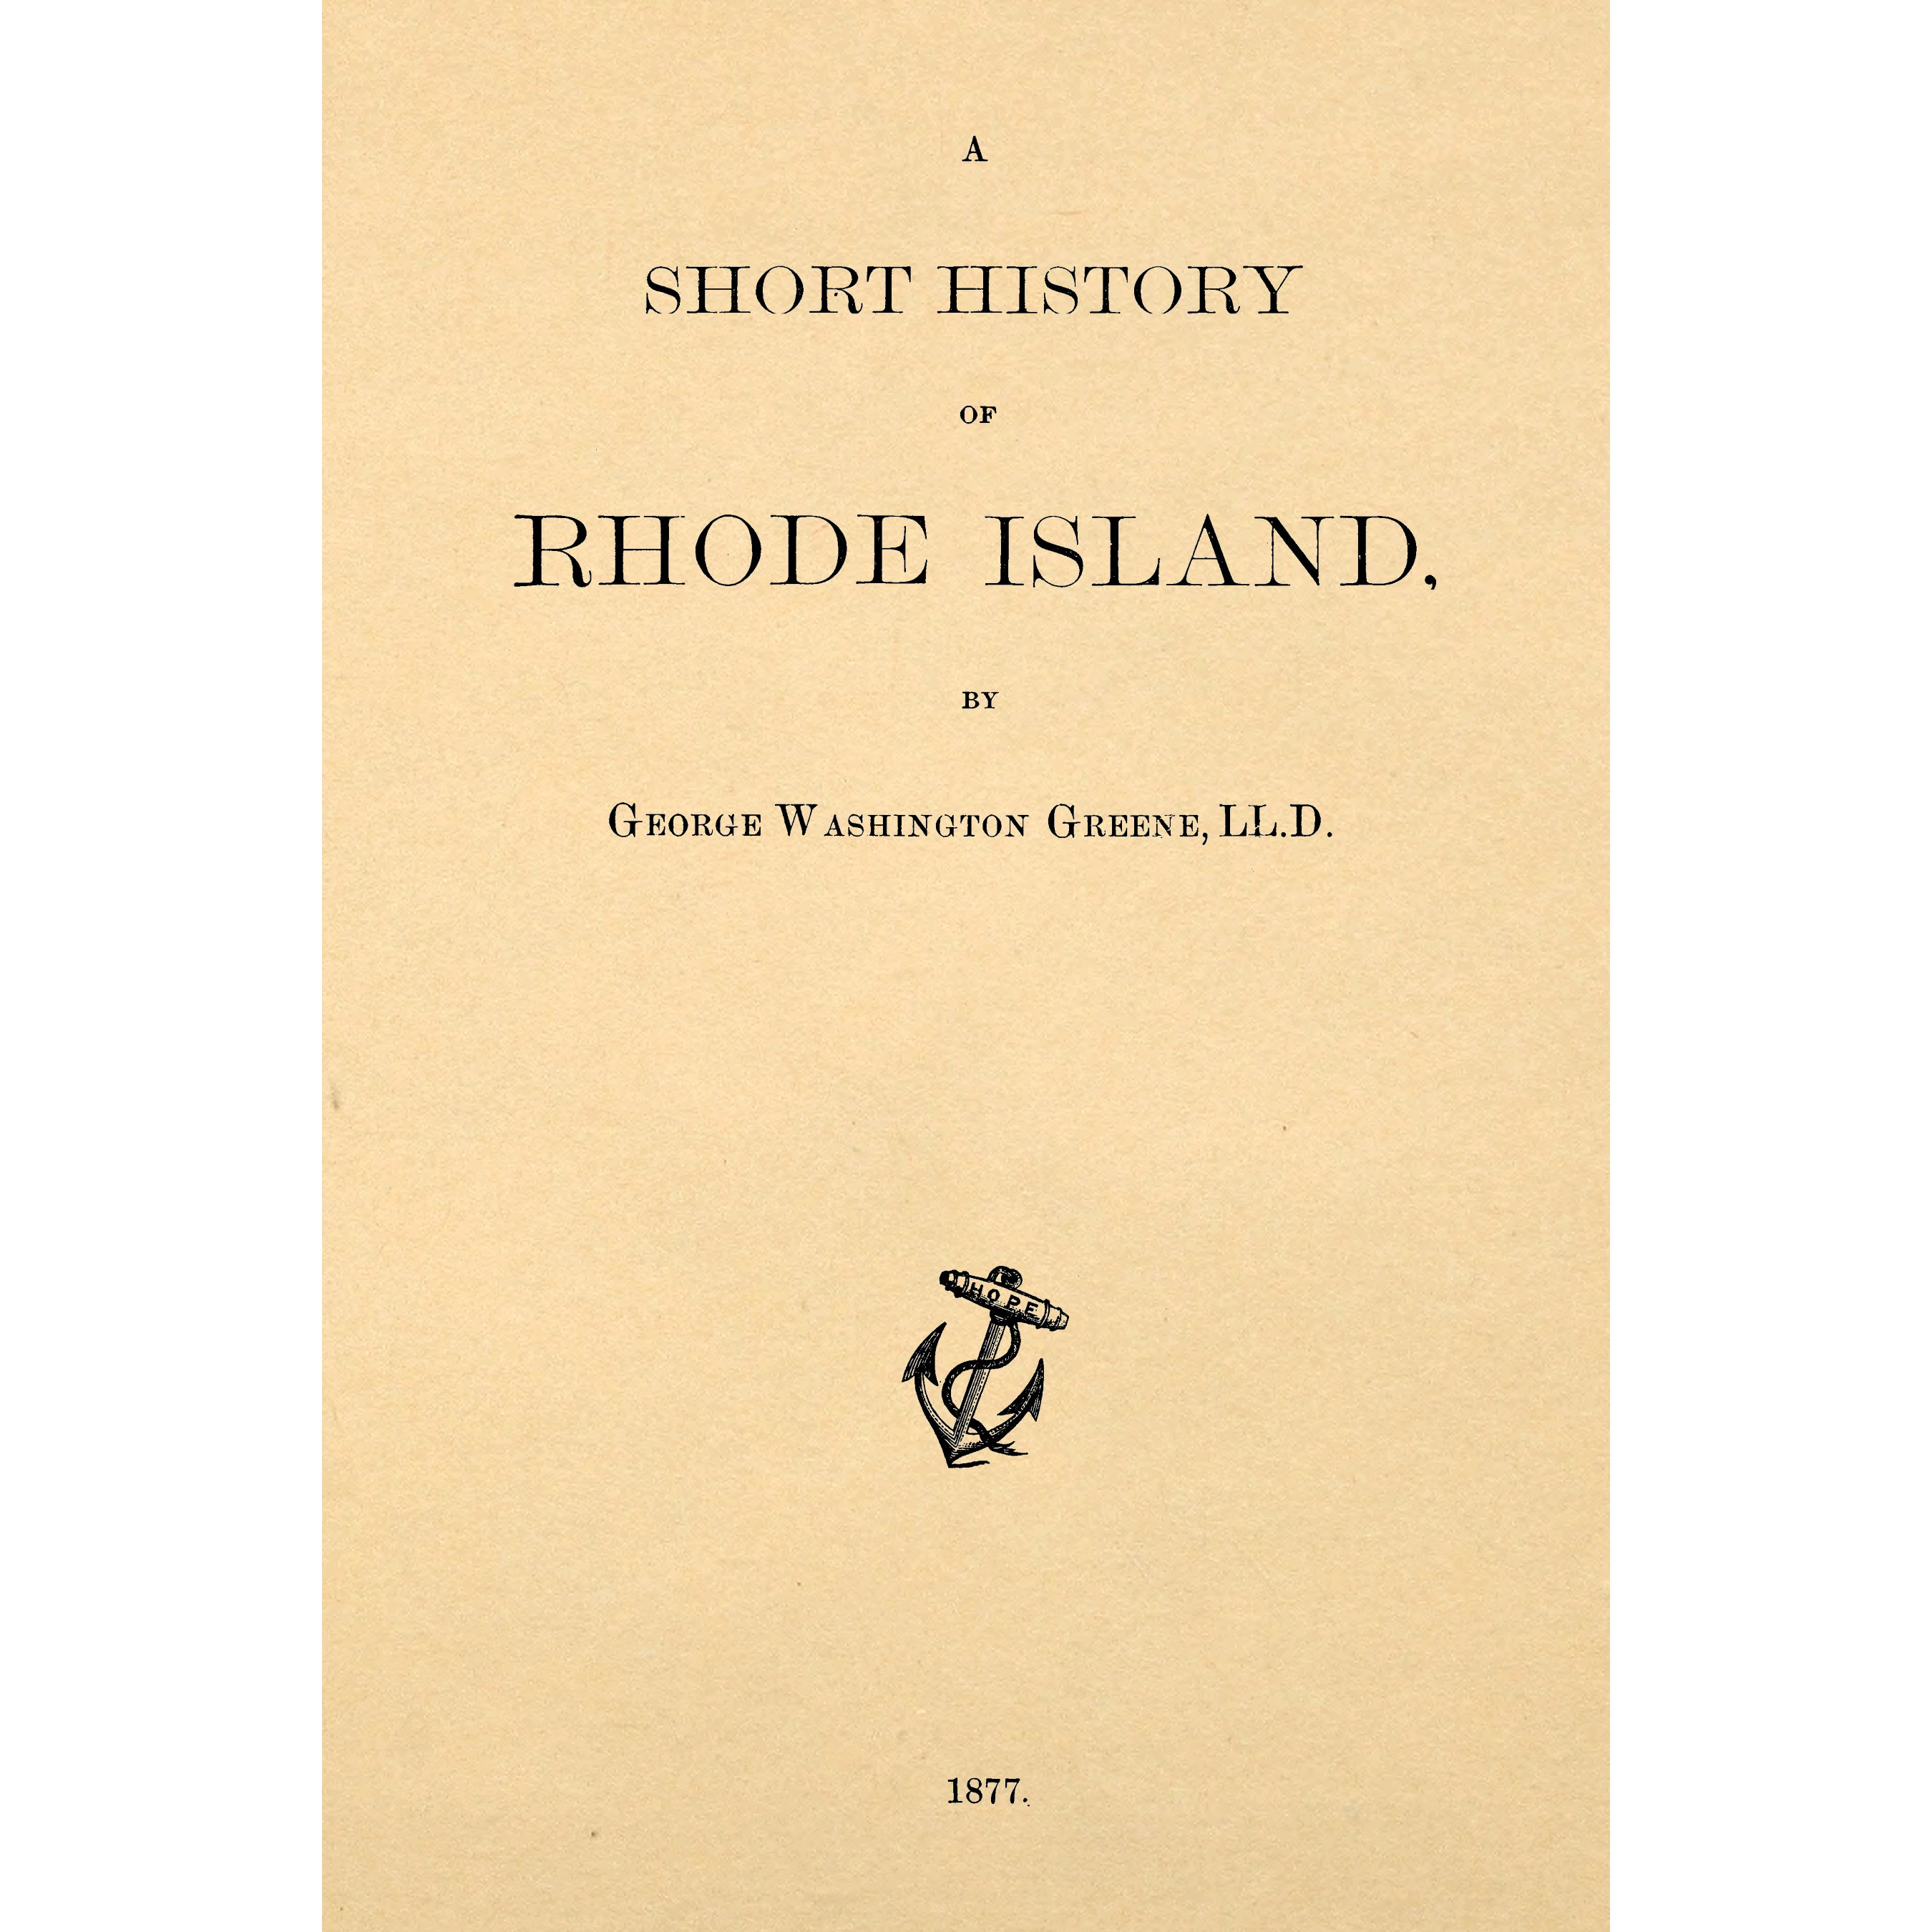 A short history of Rhode Island